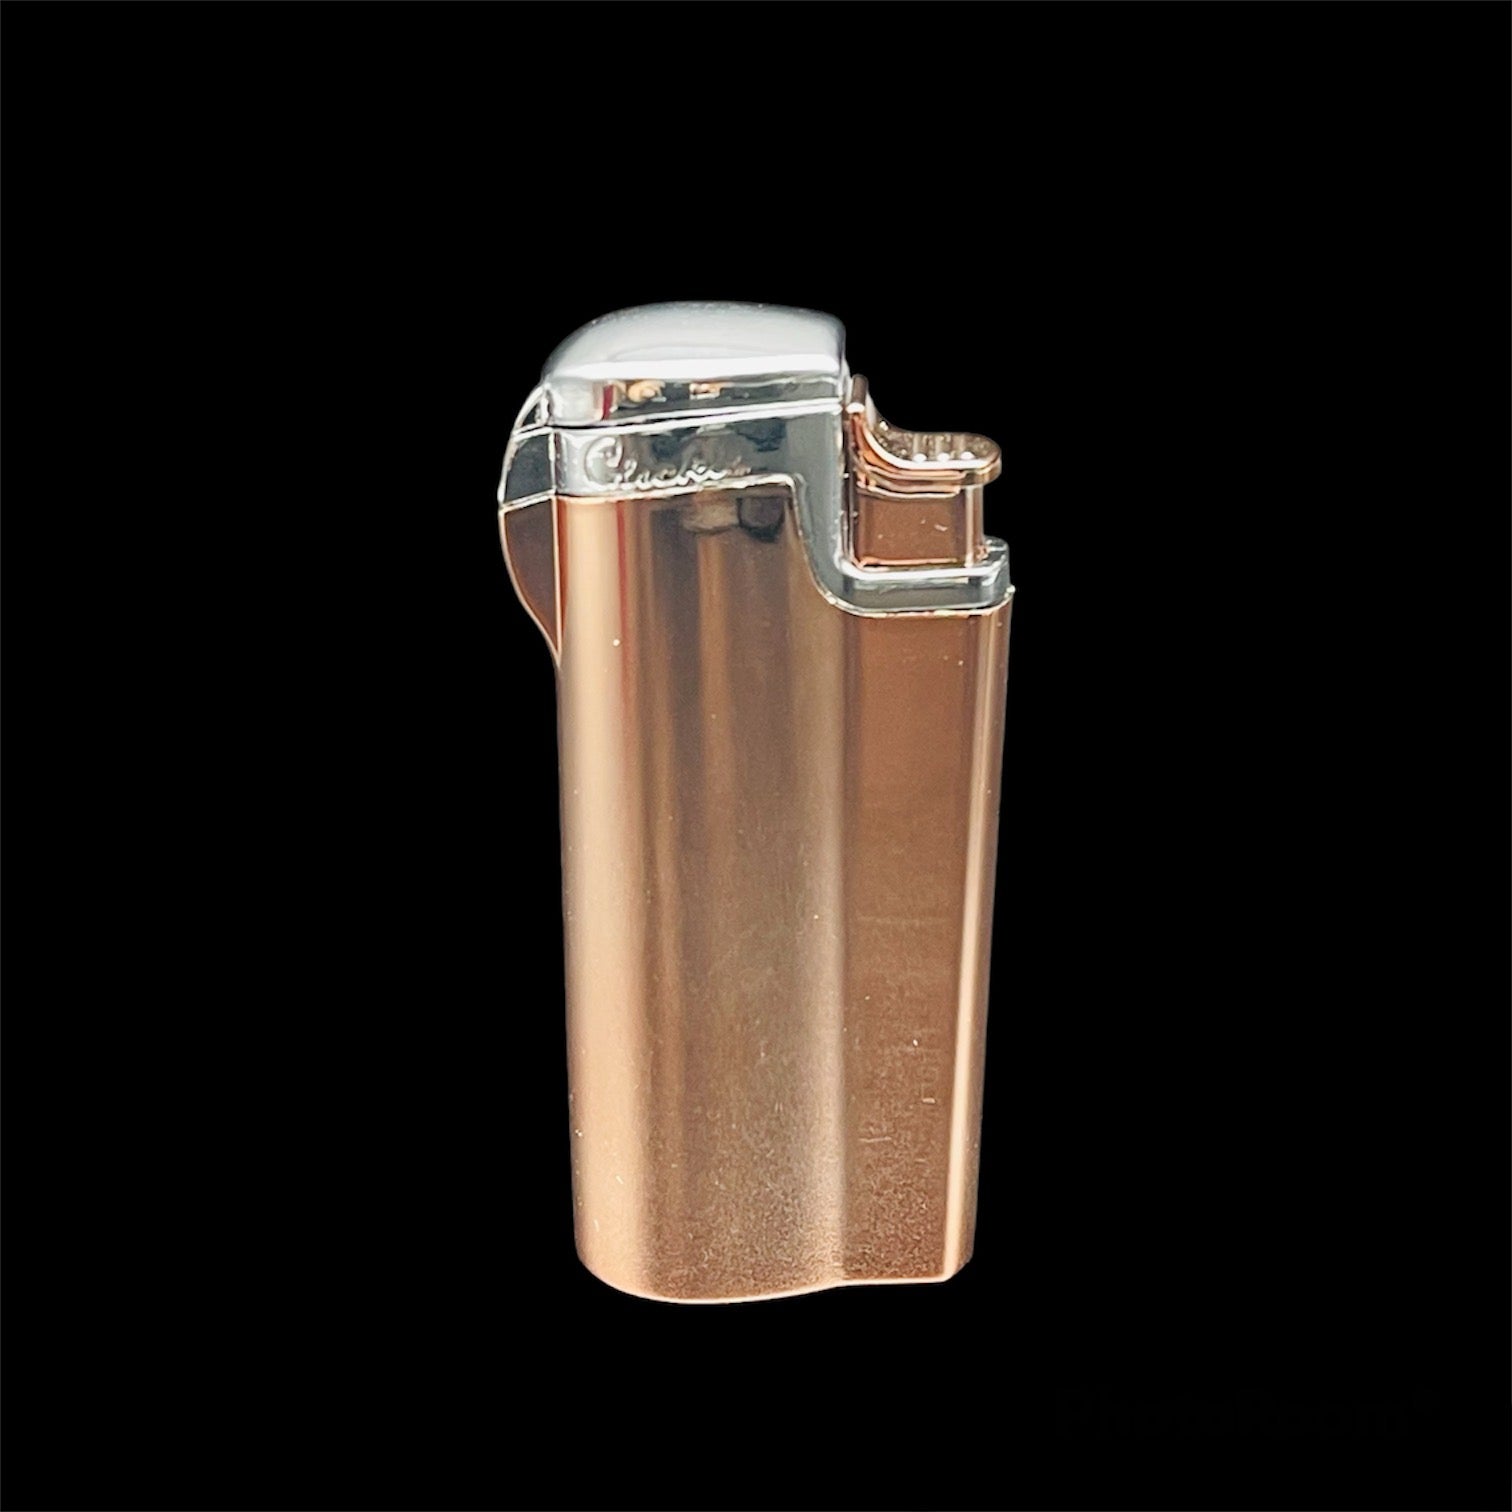 Four Flames Pocket Size Torch Lighter bronze